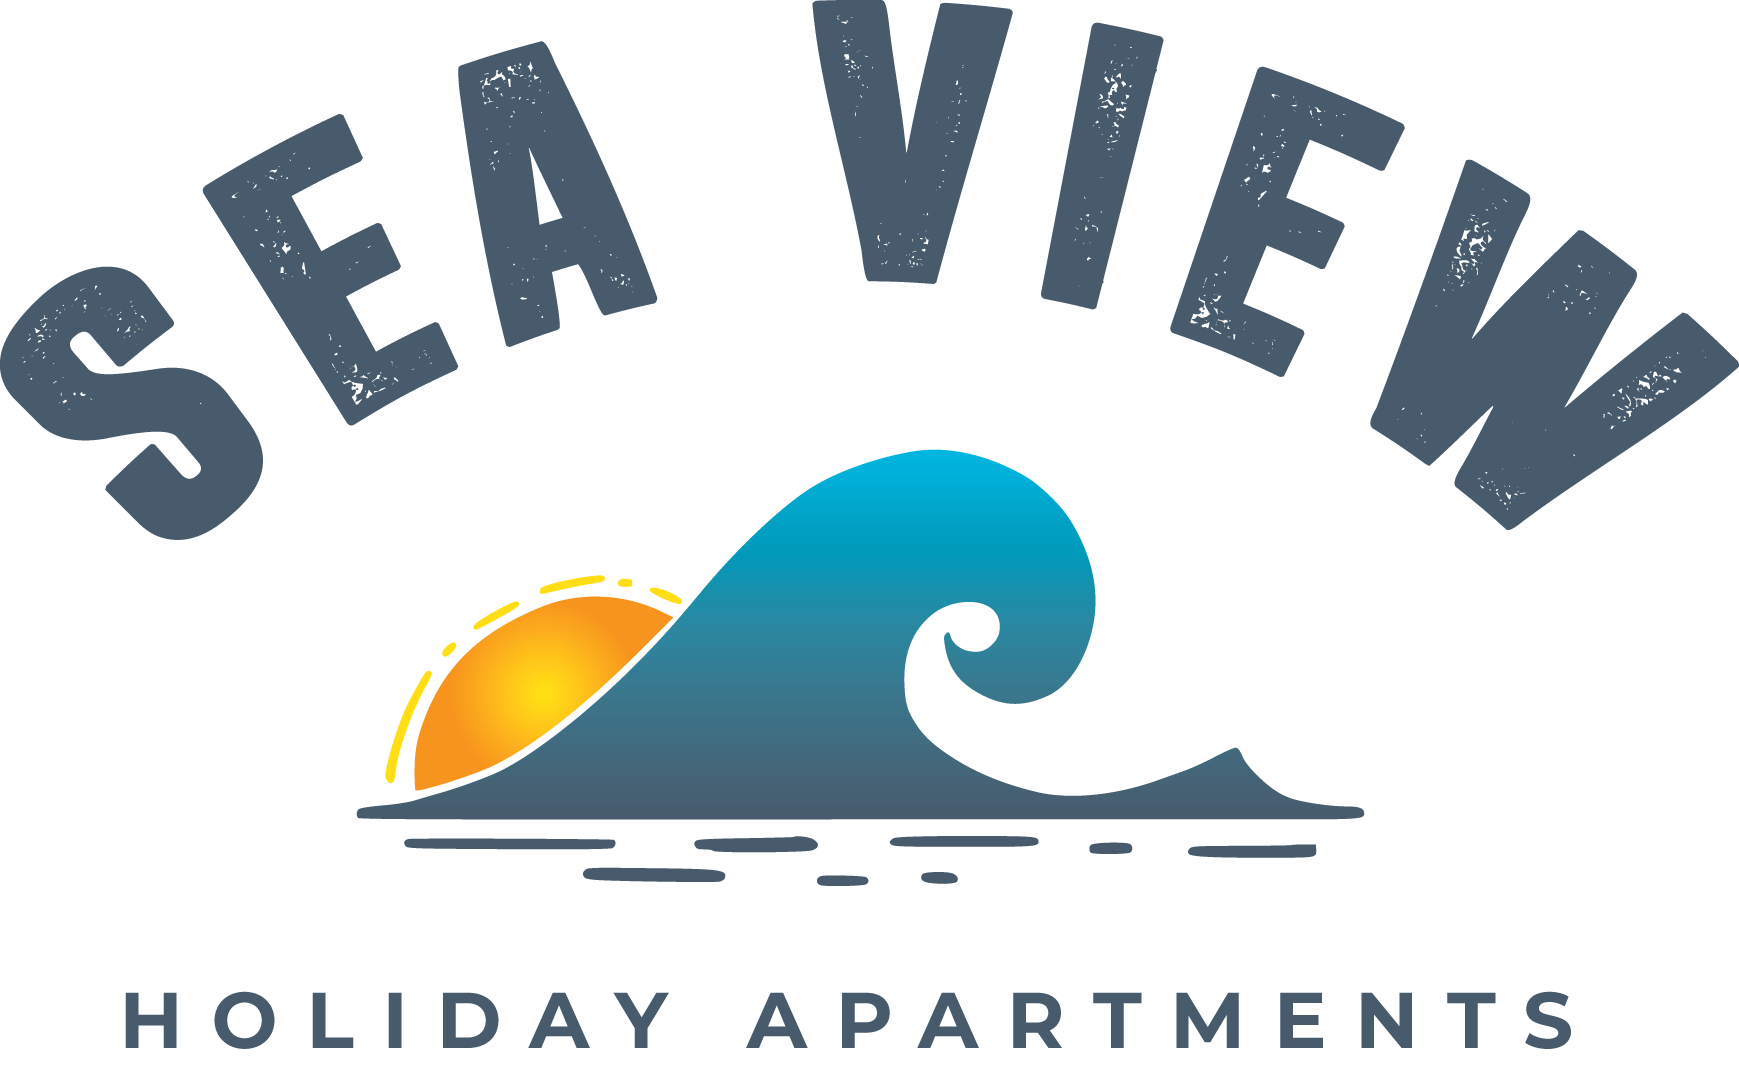 Sea View Holiday Apartments